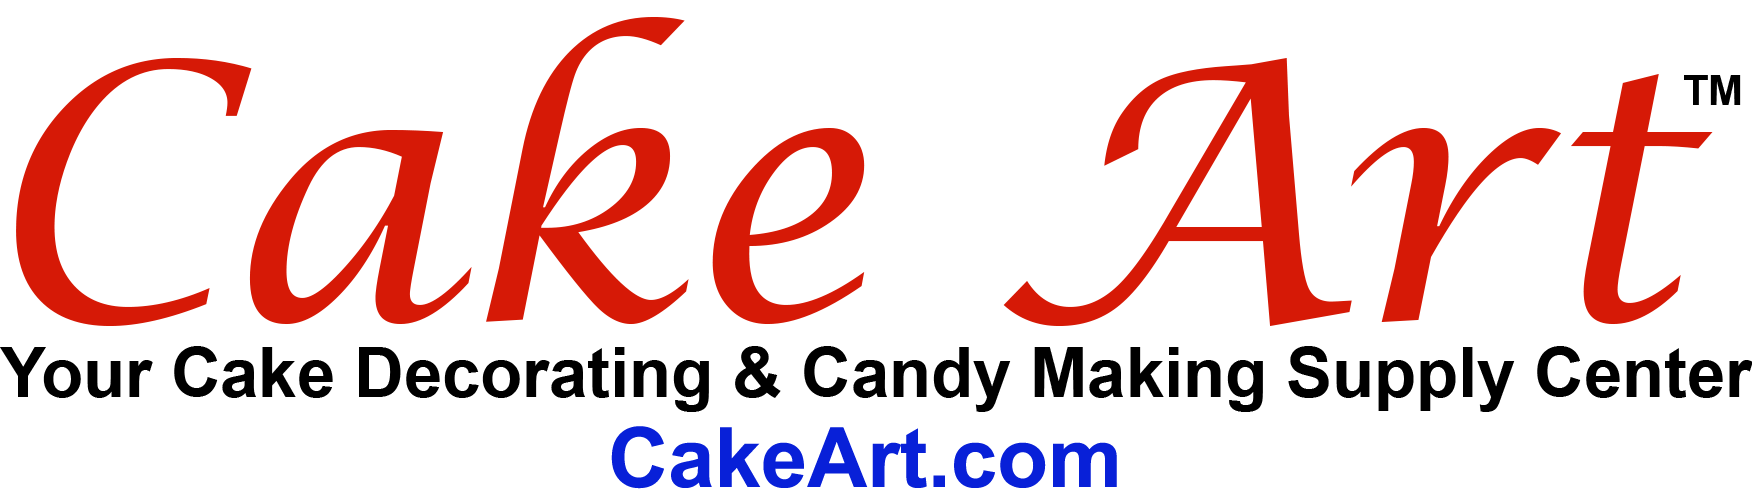 Cake Art Logo